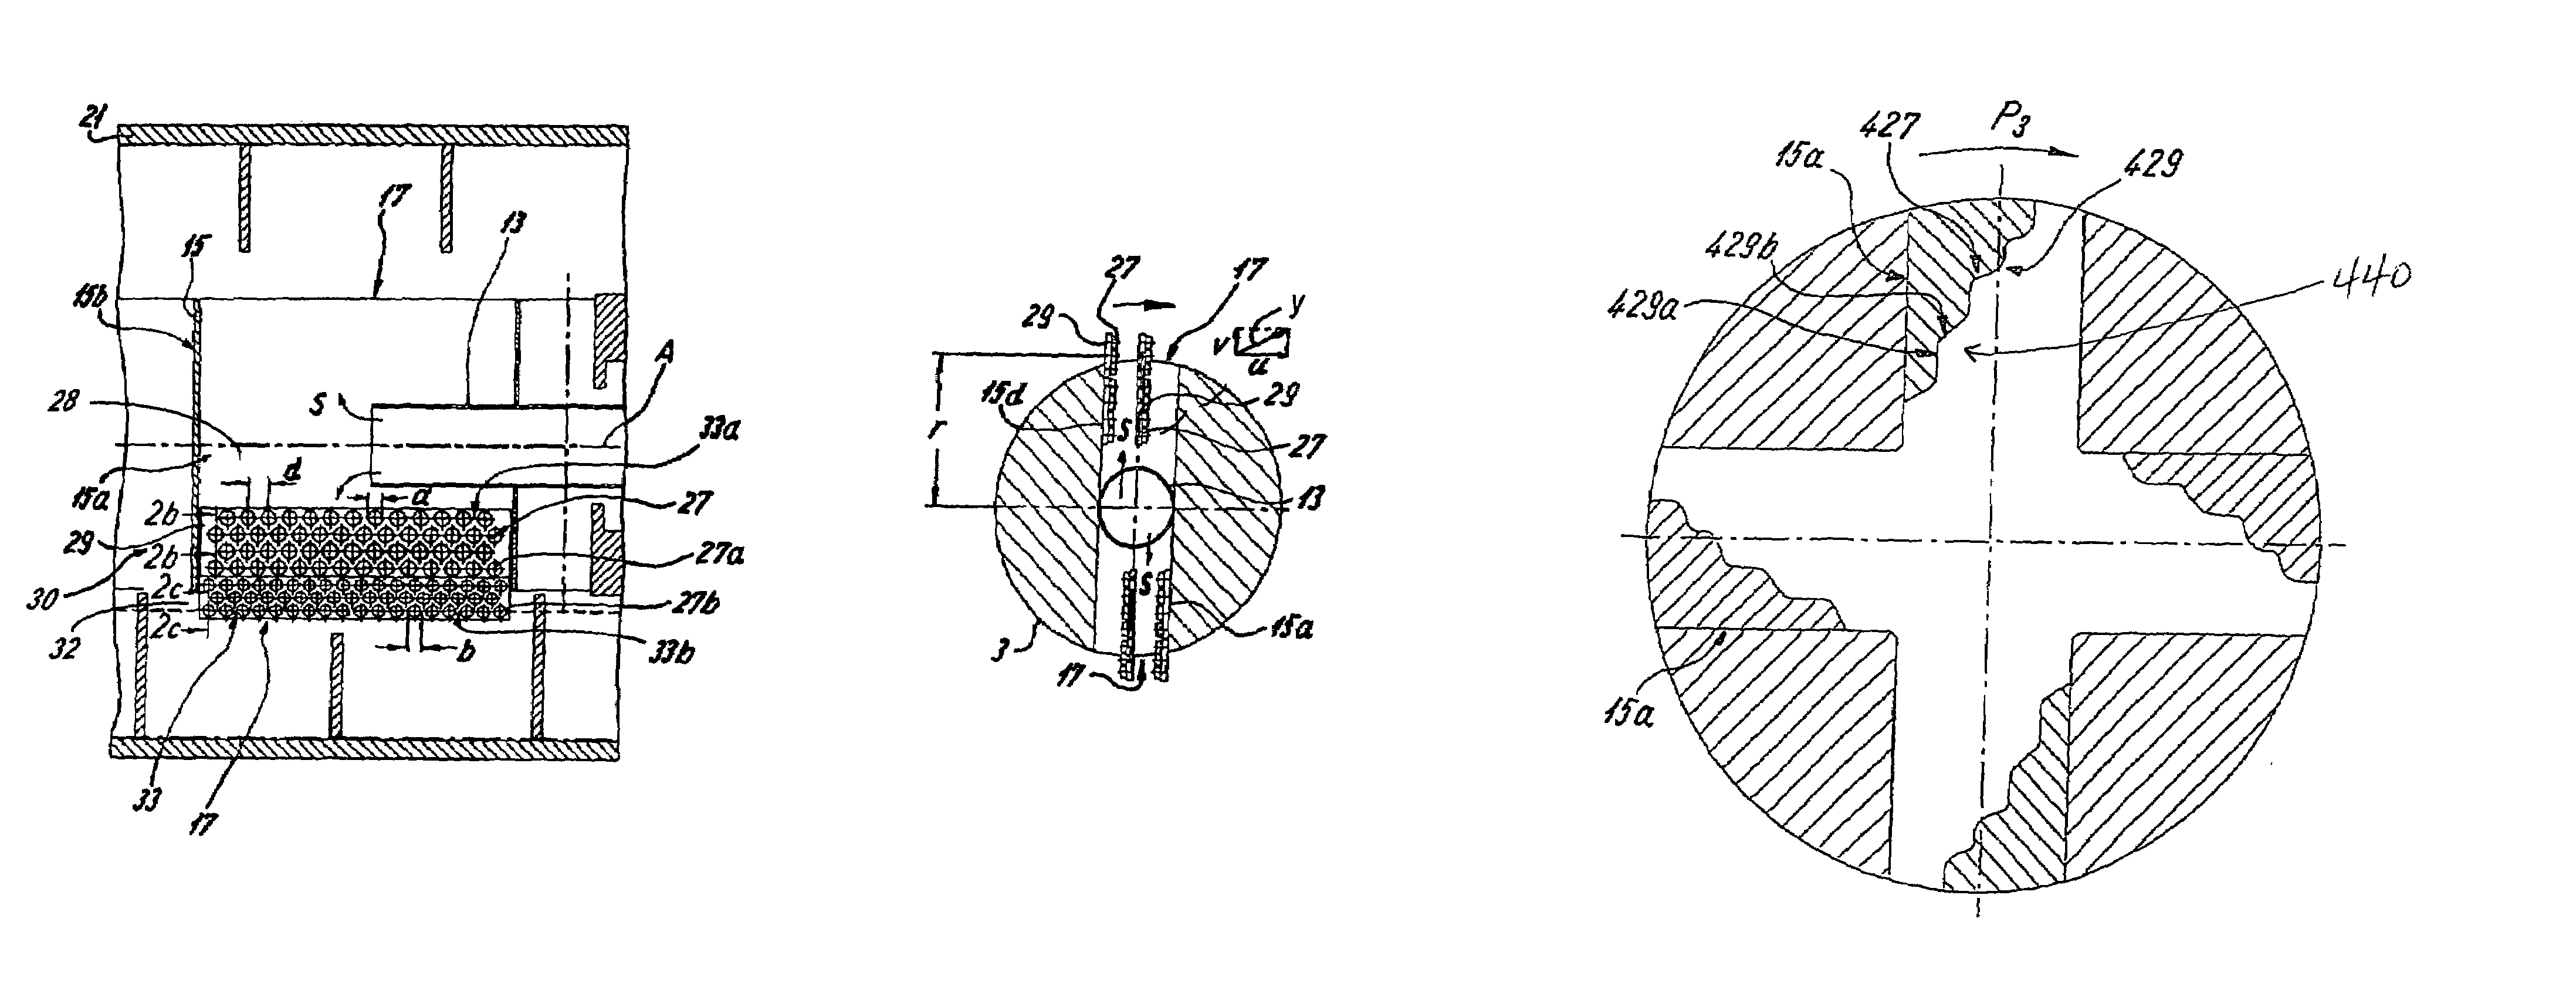 Solid bowl screw centrifuge comprising a distributor